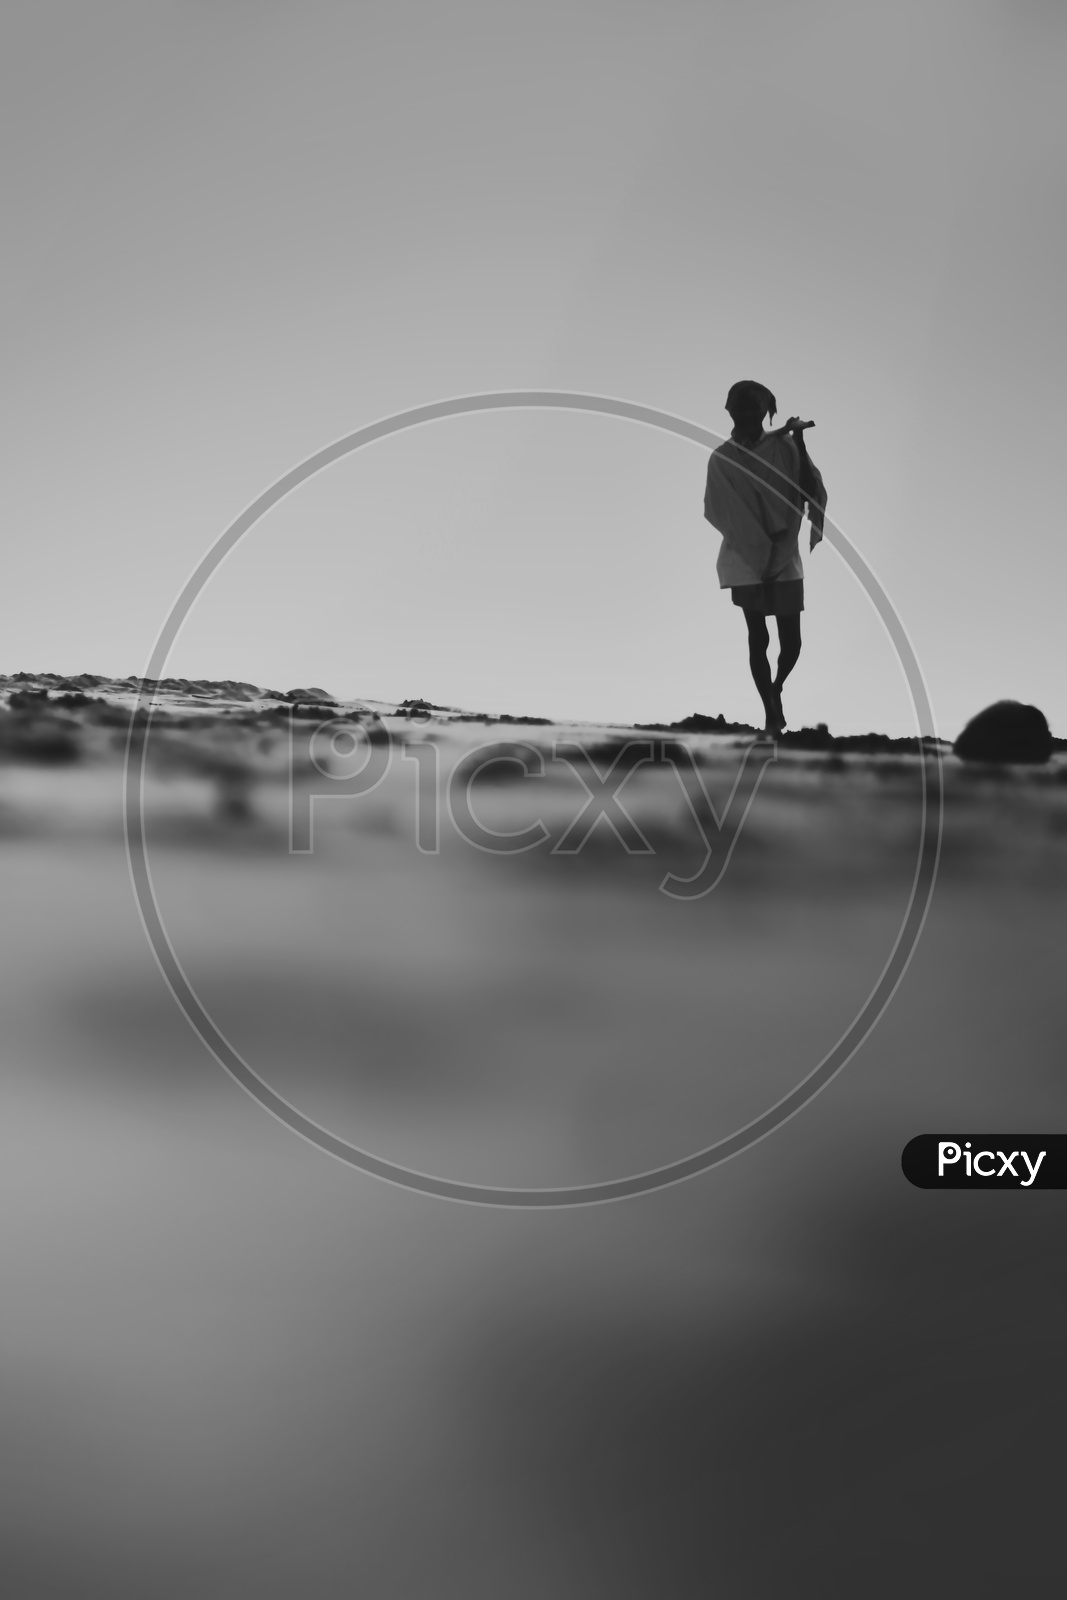 An Old Man Walking Alone On Onshore Beach / Man Walking Alone on Bay